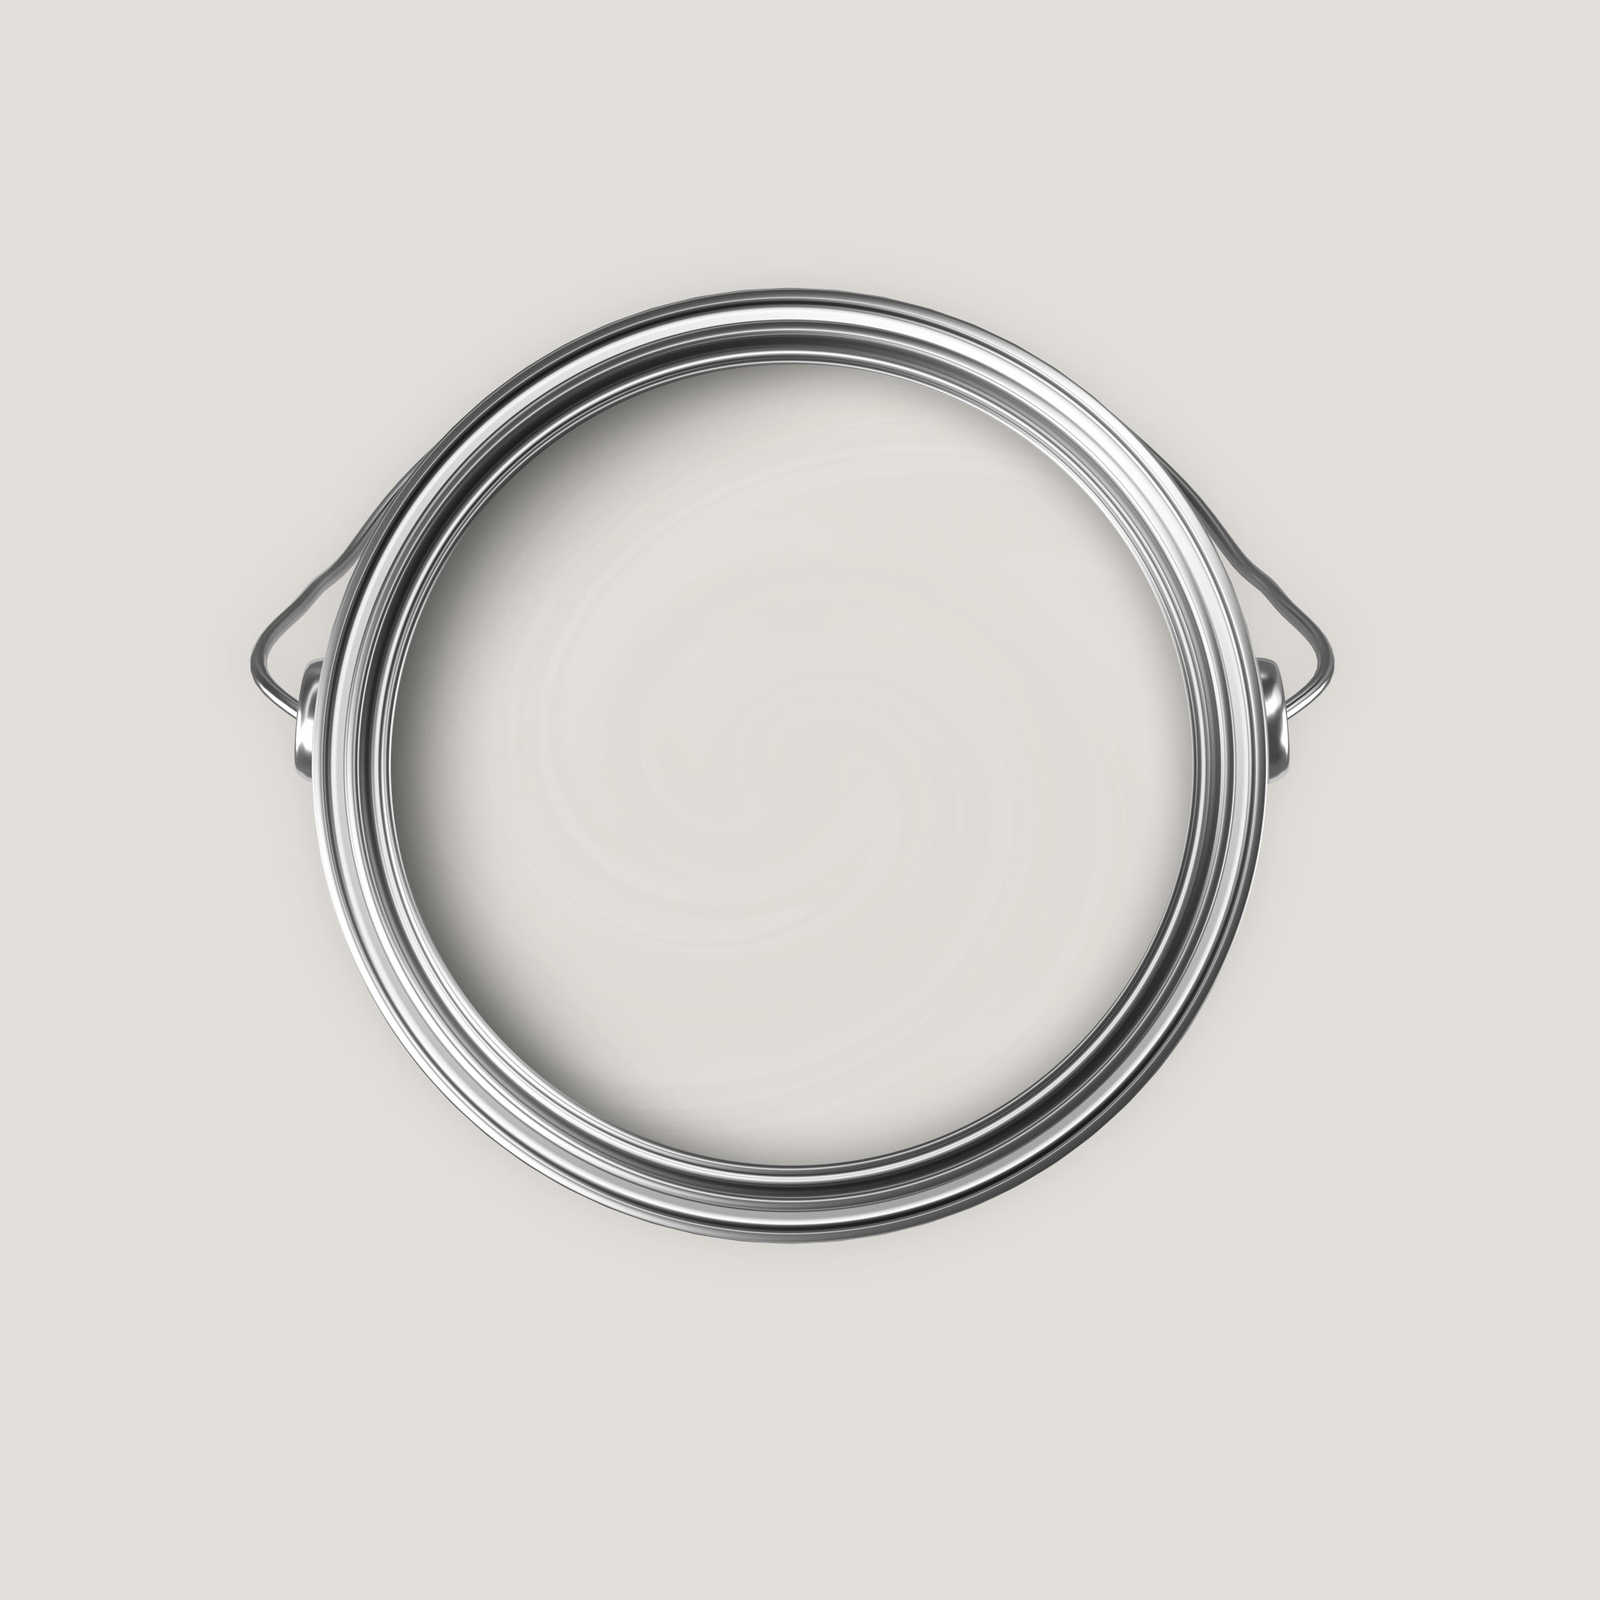             Premium Wall Paint timeless light grey »Creamy Grey« NW108 – 5 litre
        